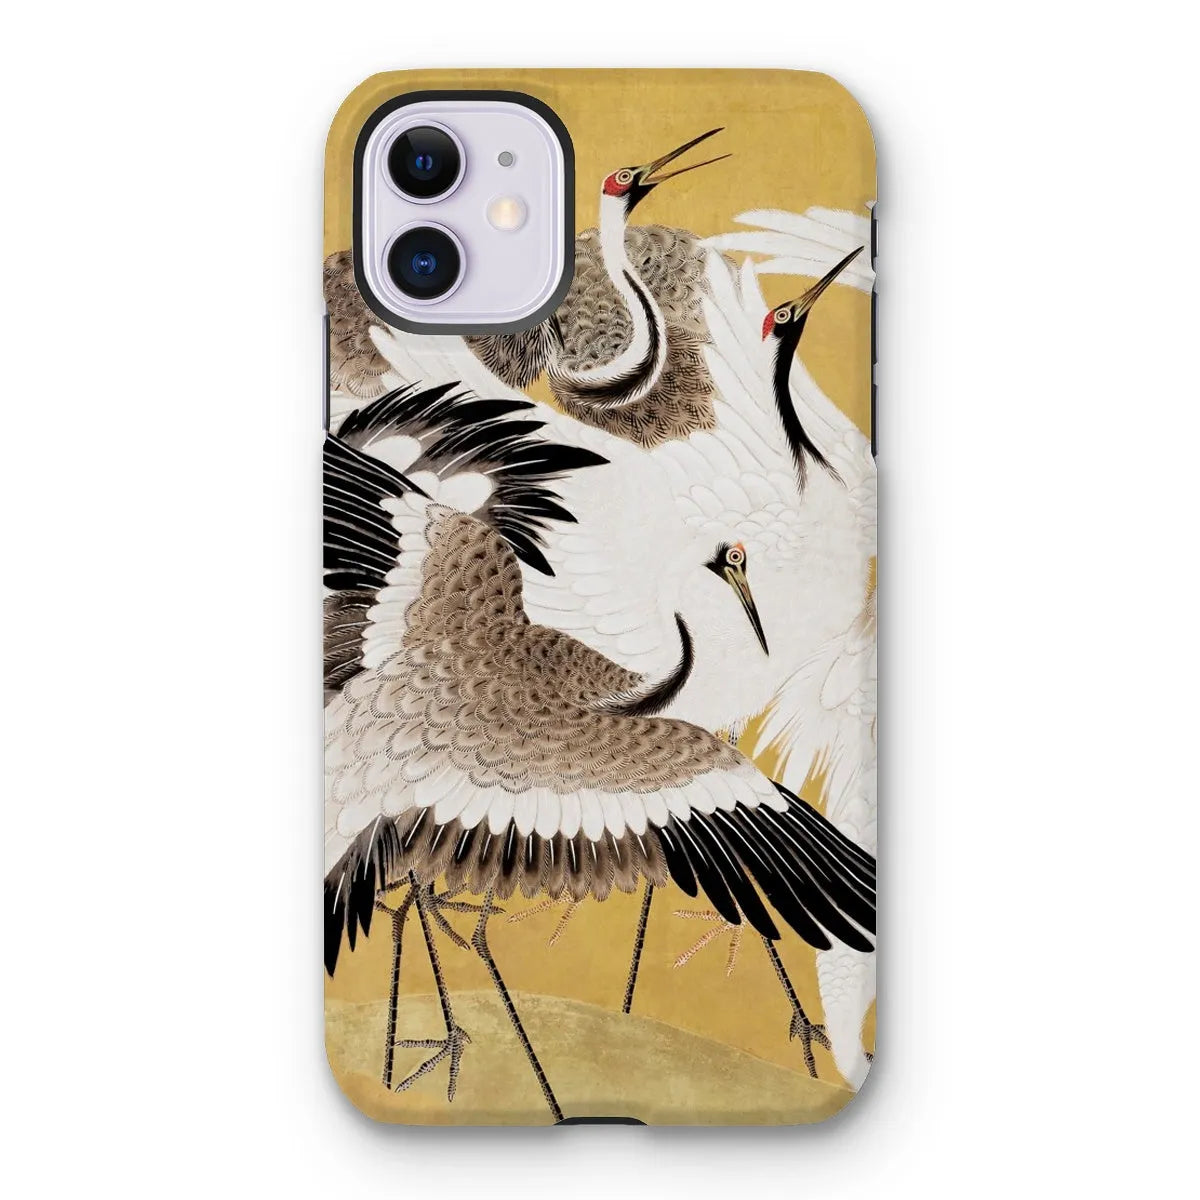 Flock Of Cranes Japanese Bird Art Phone Case - Ishida Yūtei - Iphone 11 / Matte - Mobile Phone Cases - Aesthetic Art